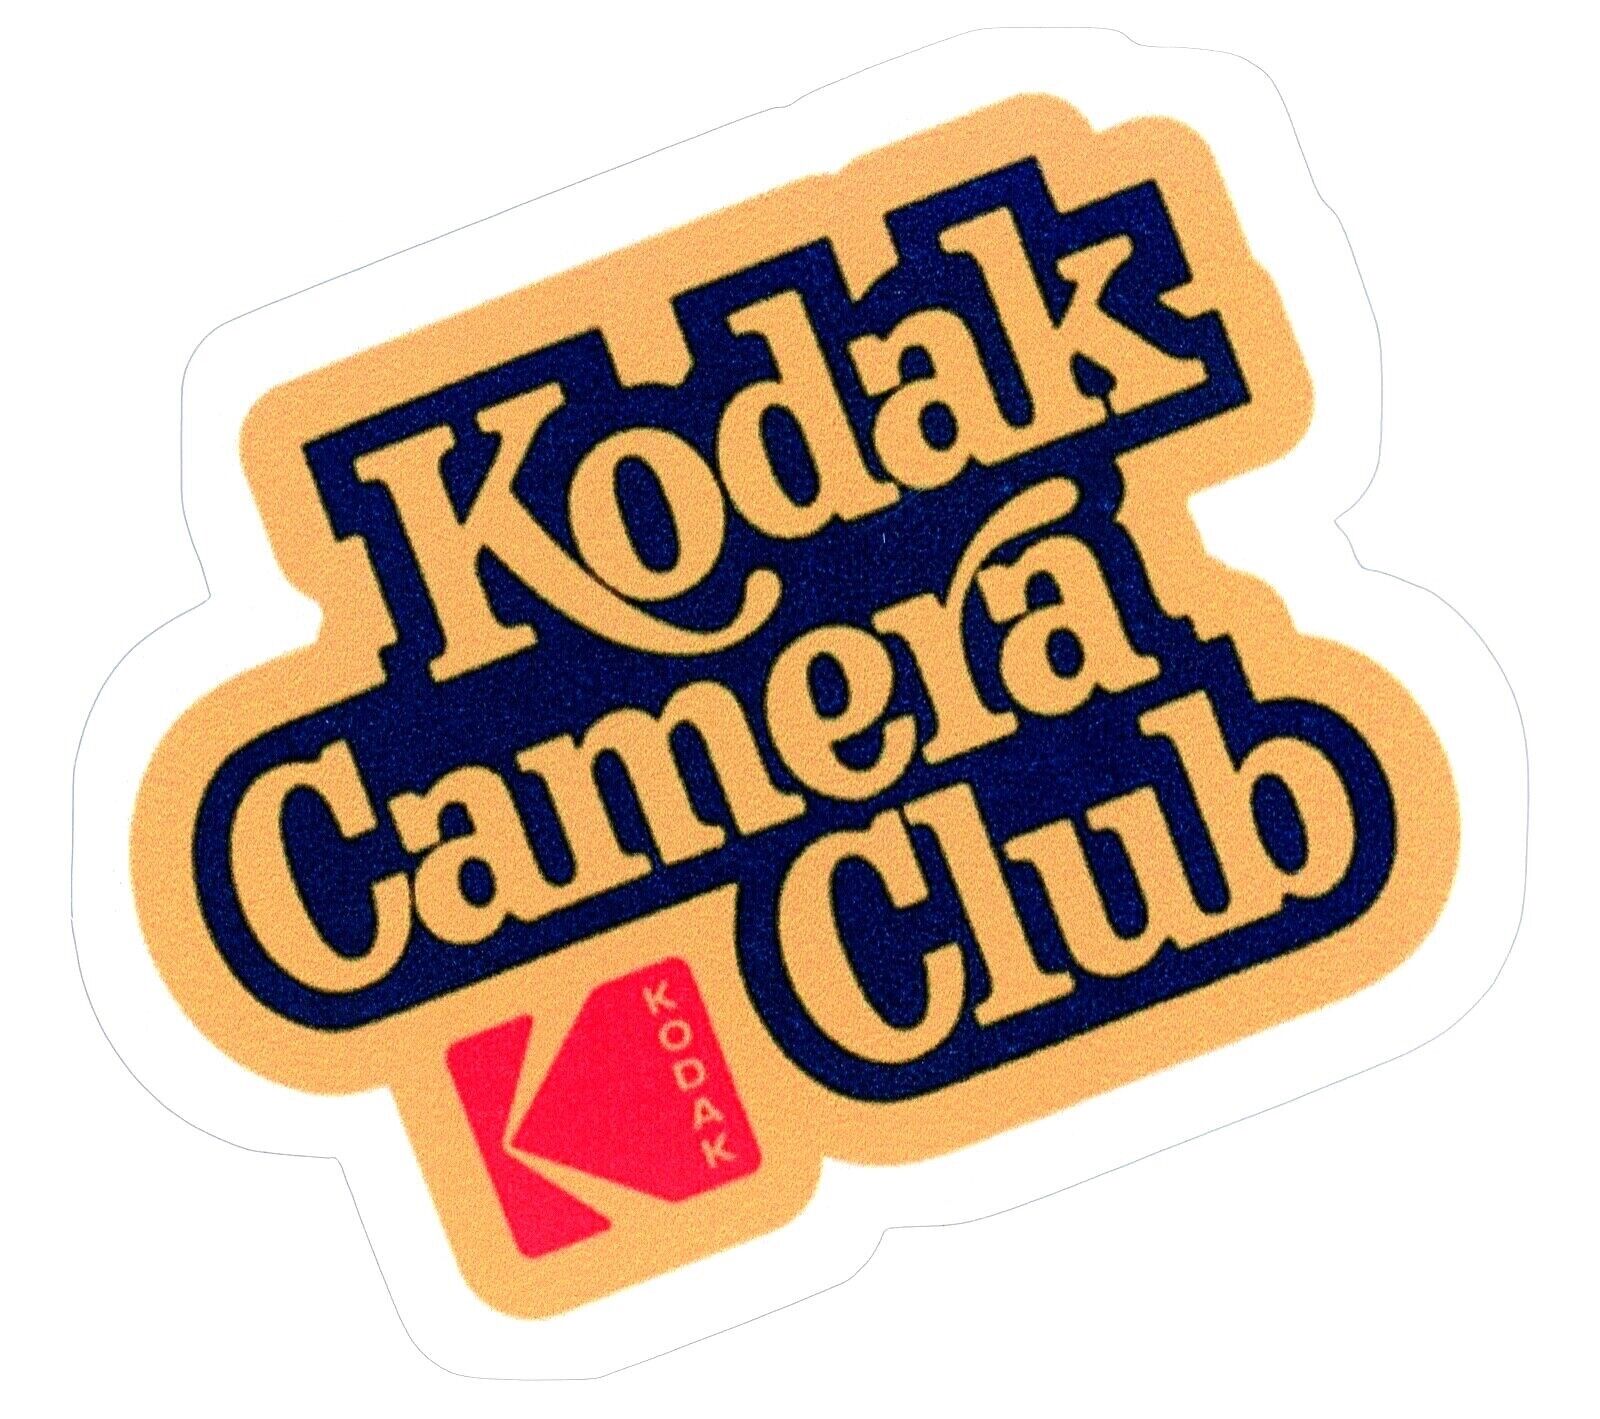 Kodak Camera Club Logo Sticker (Reproduction)